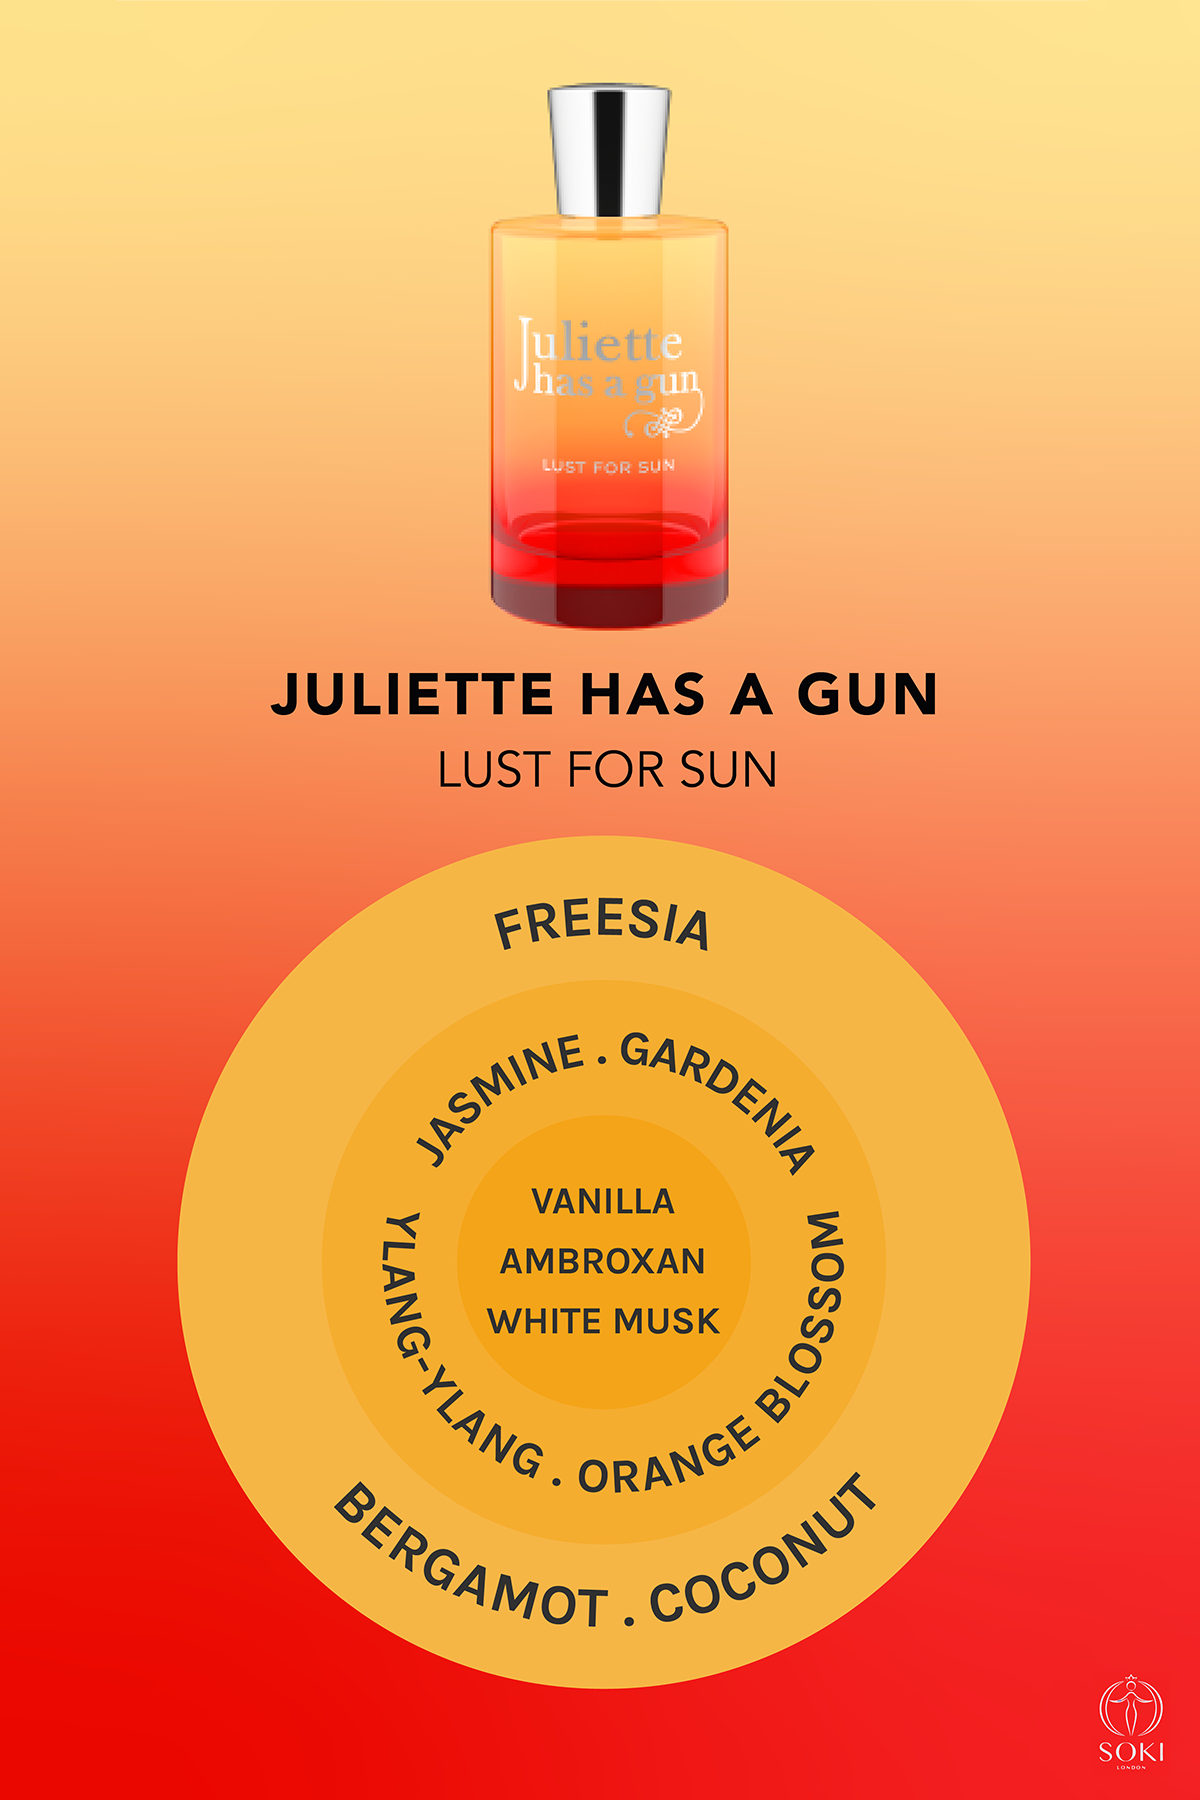 Juliette มีความปรารถนาปืนสำหรับดวงอาทิตย์